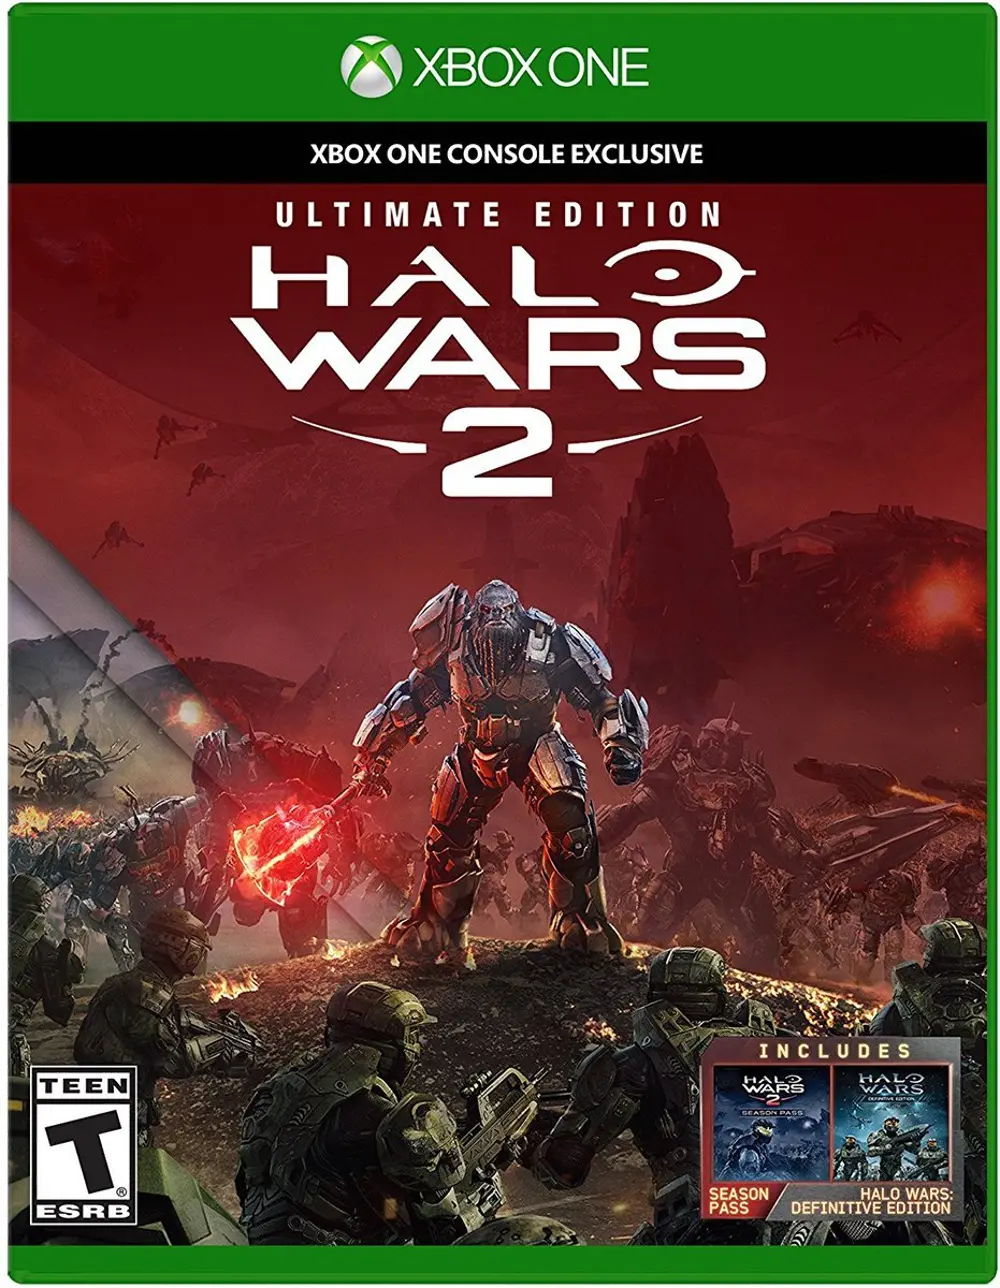 XB1/HALO_WARS_2_UE Halo Wars 2: Ultimate Edition - Xbox One-1